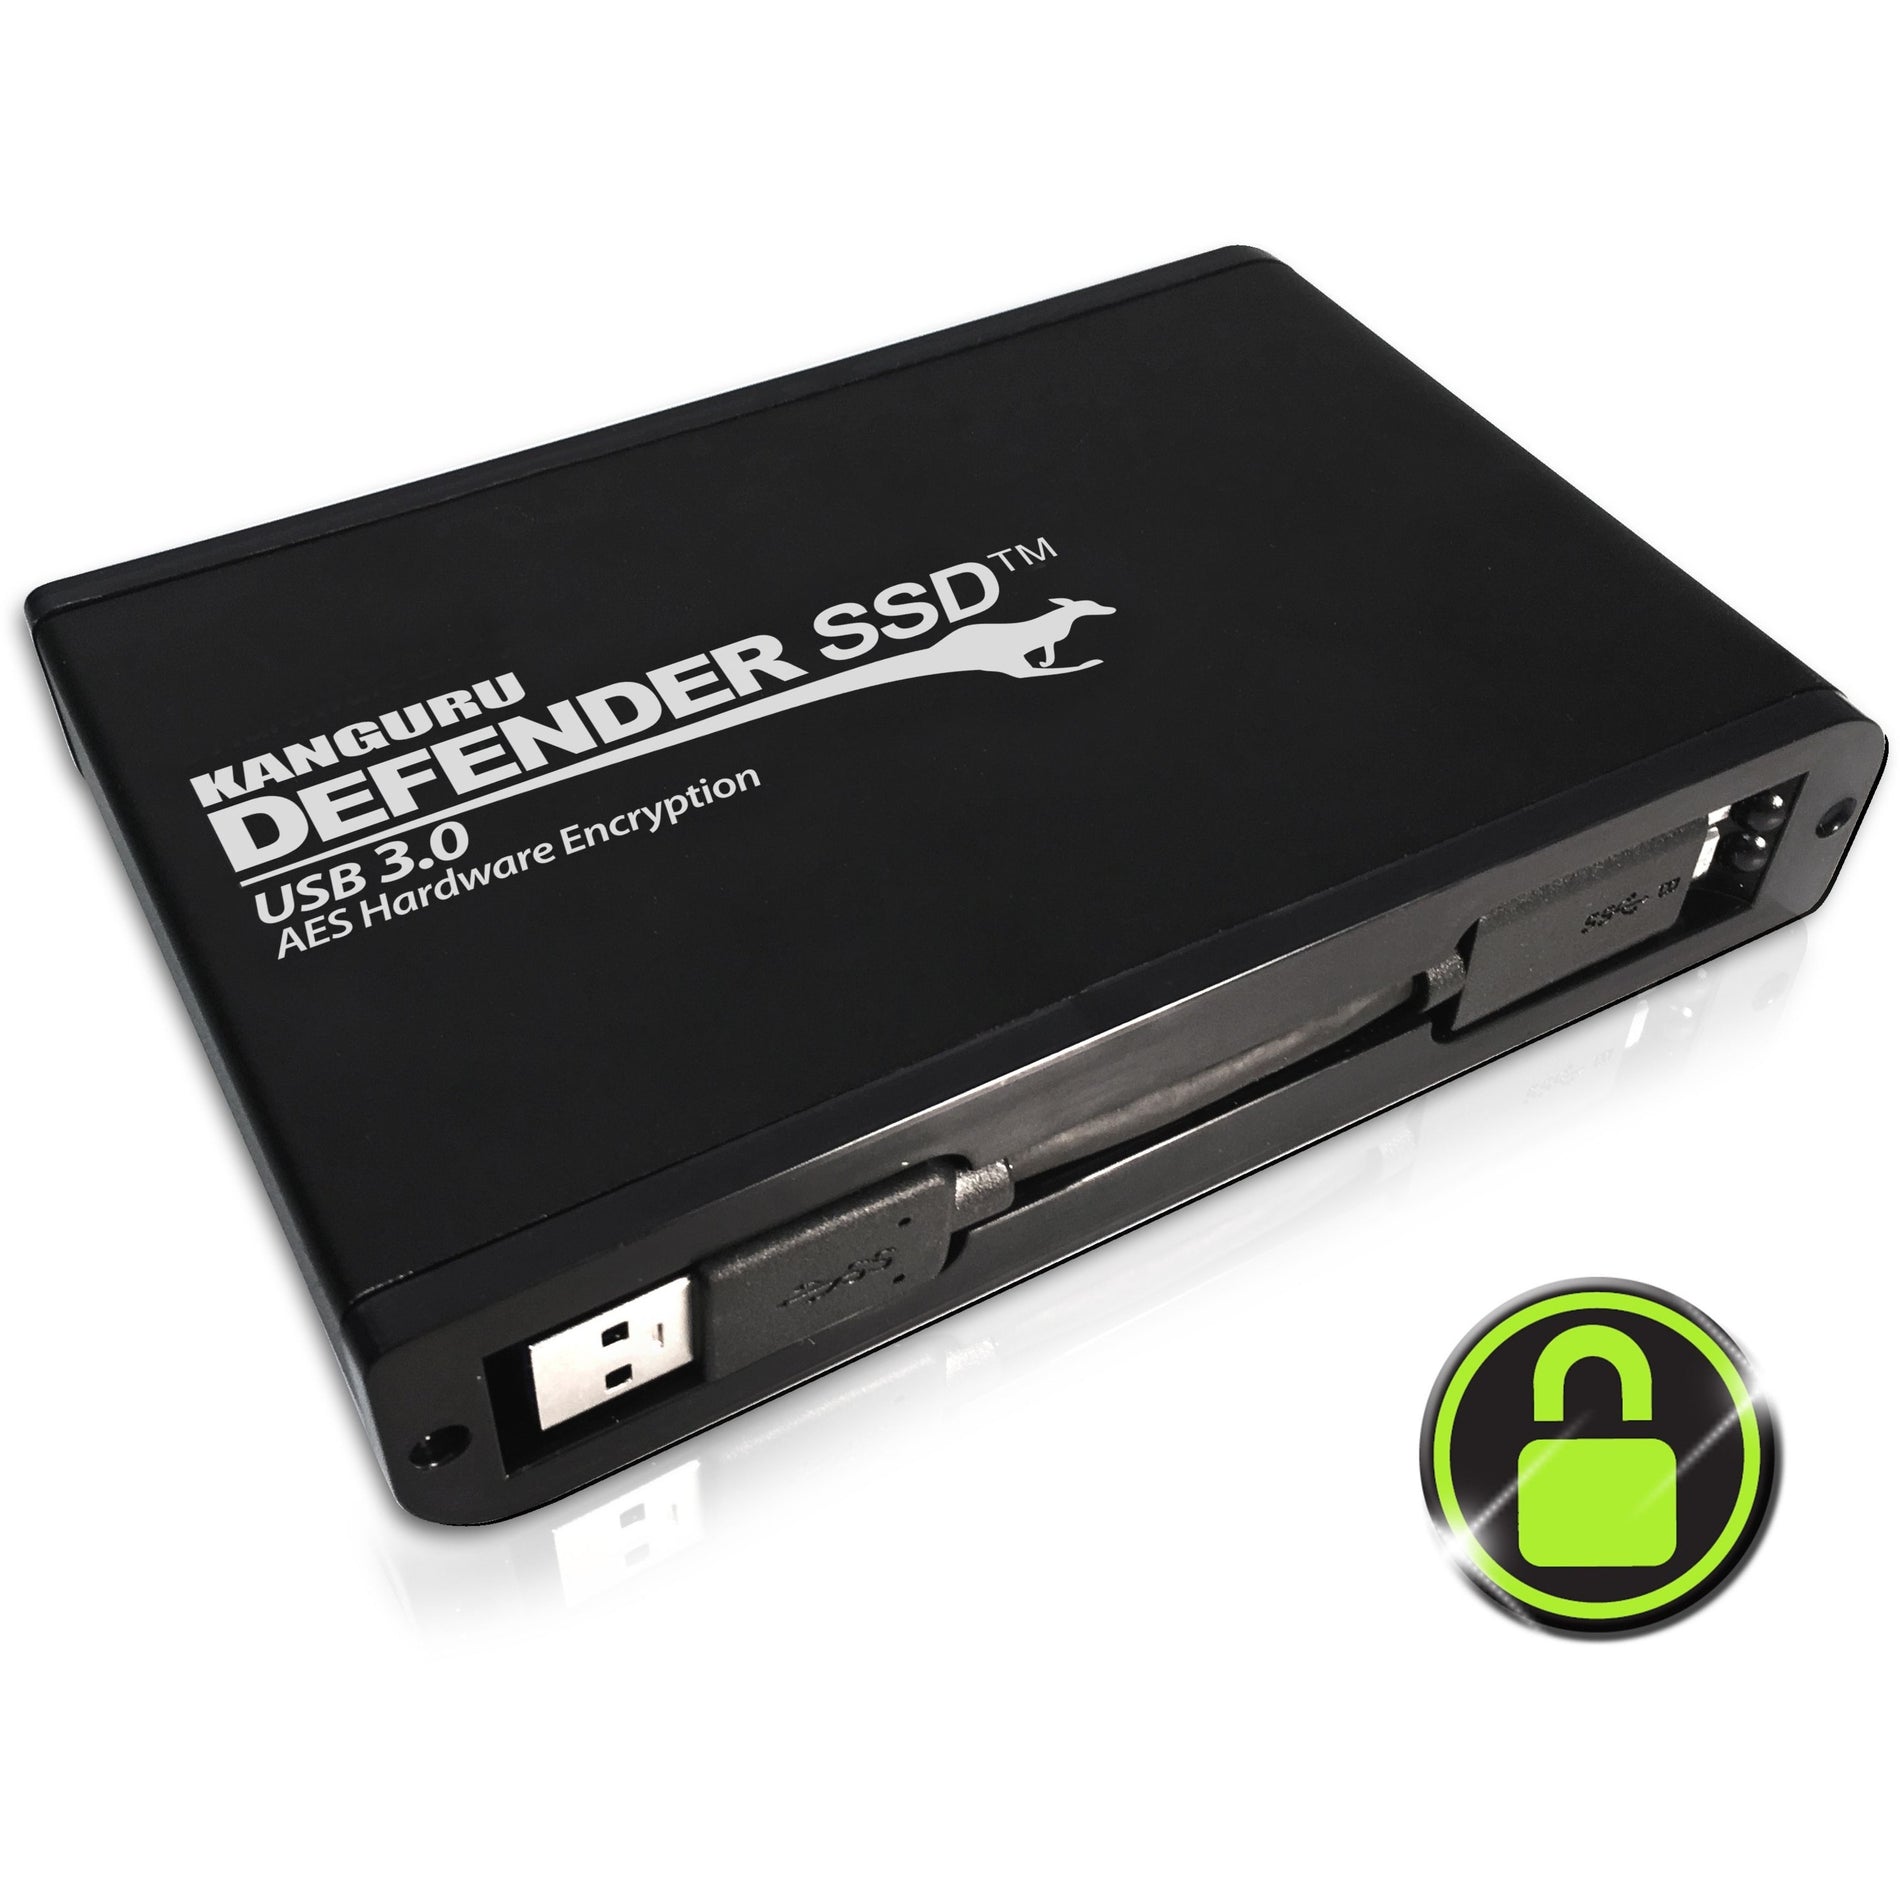 Kanguru KDH3B-35-4TSSD Defender SSD 35, 4TB, AES 256-Bit Hardware Encrypted External Solid State Drive